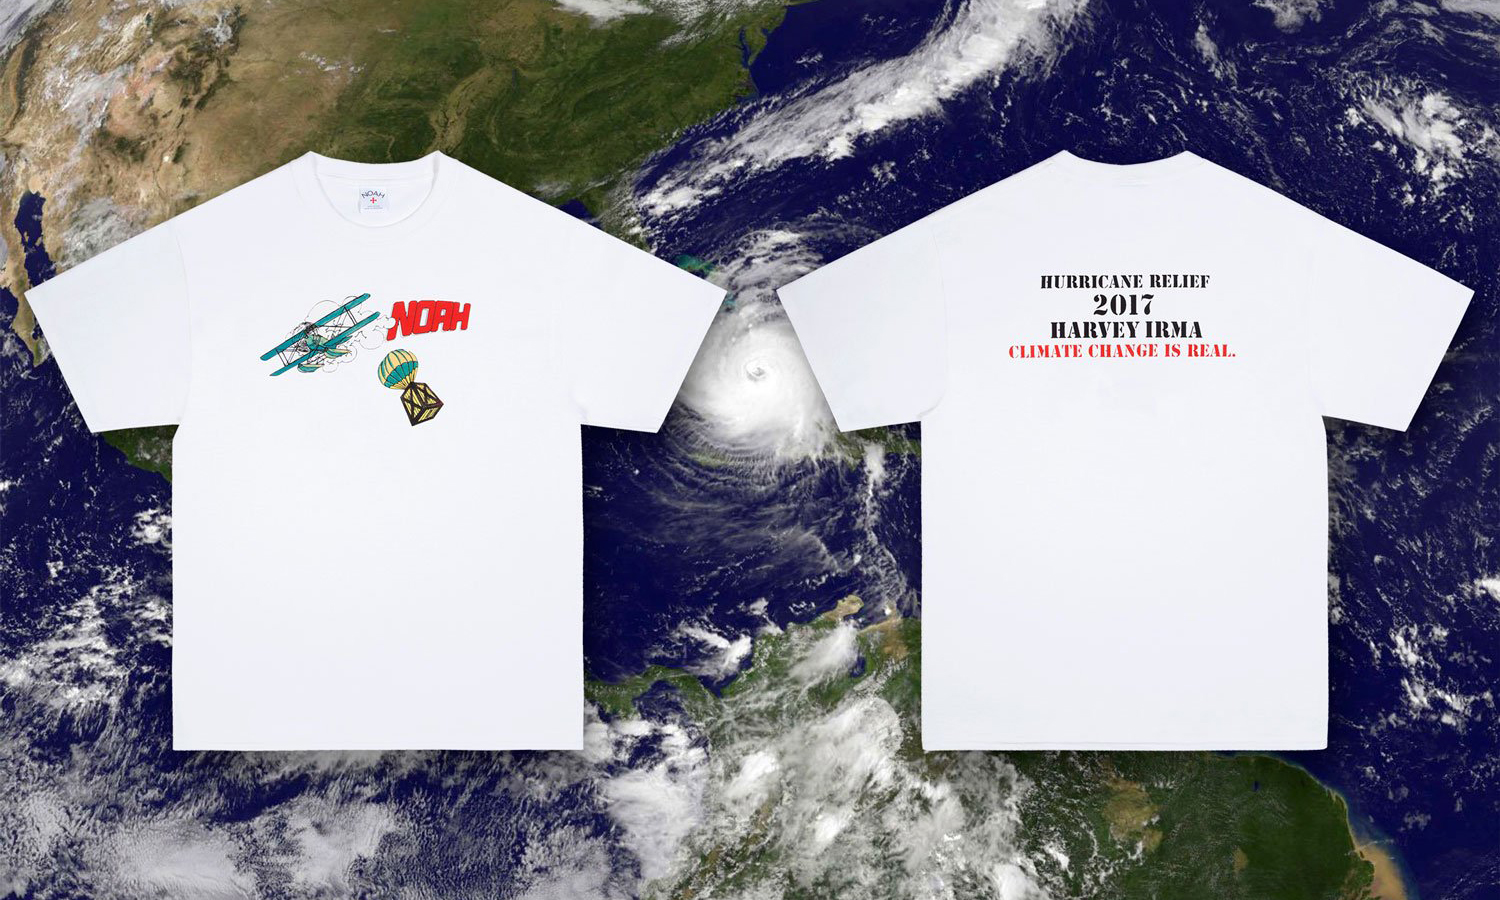 为飓风哈维灾后筹款，NOAH 发布 “HURRICANE RELIEF” T 恤